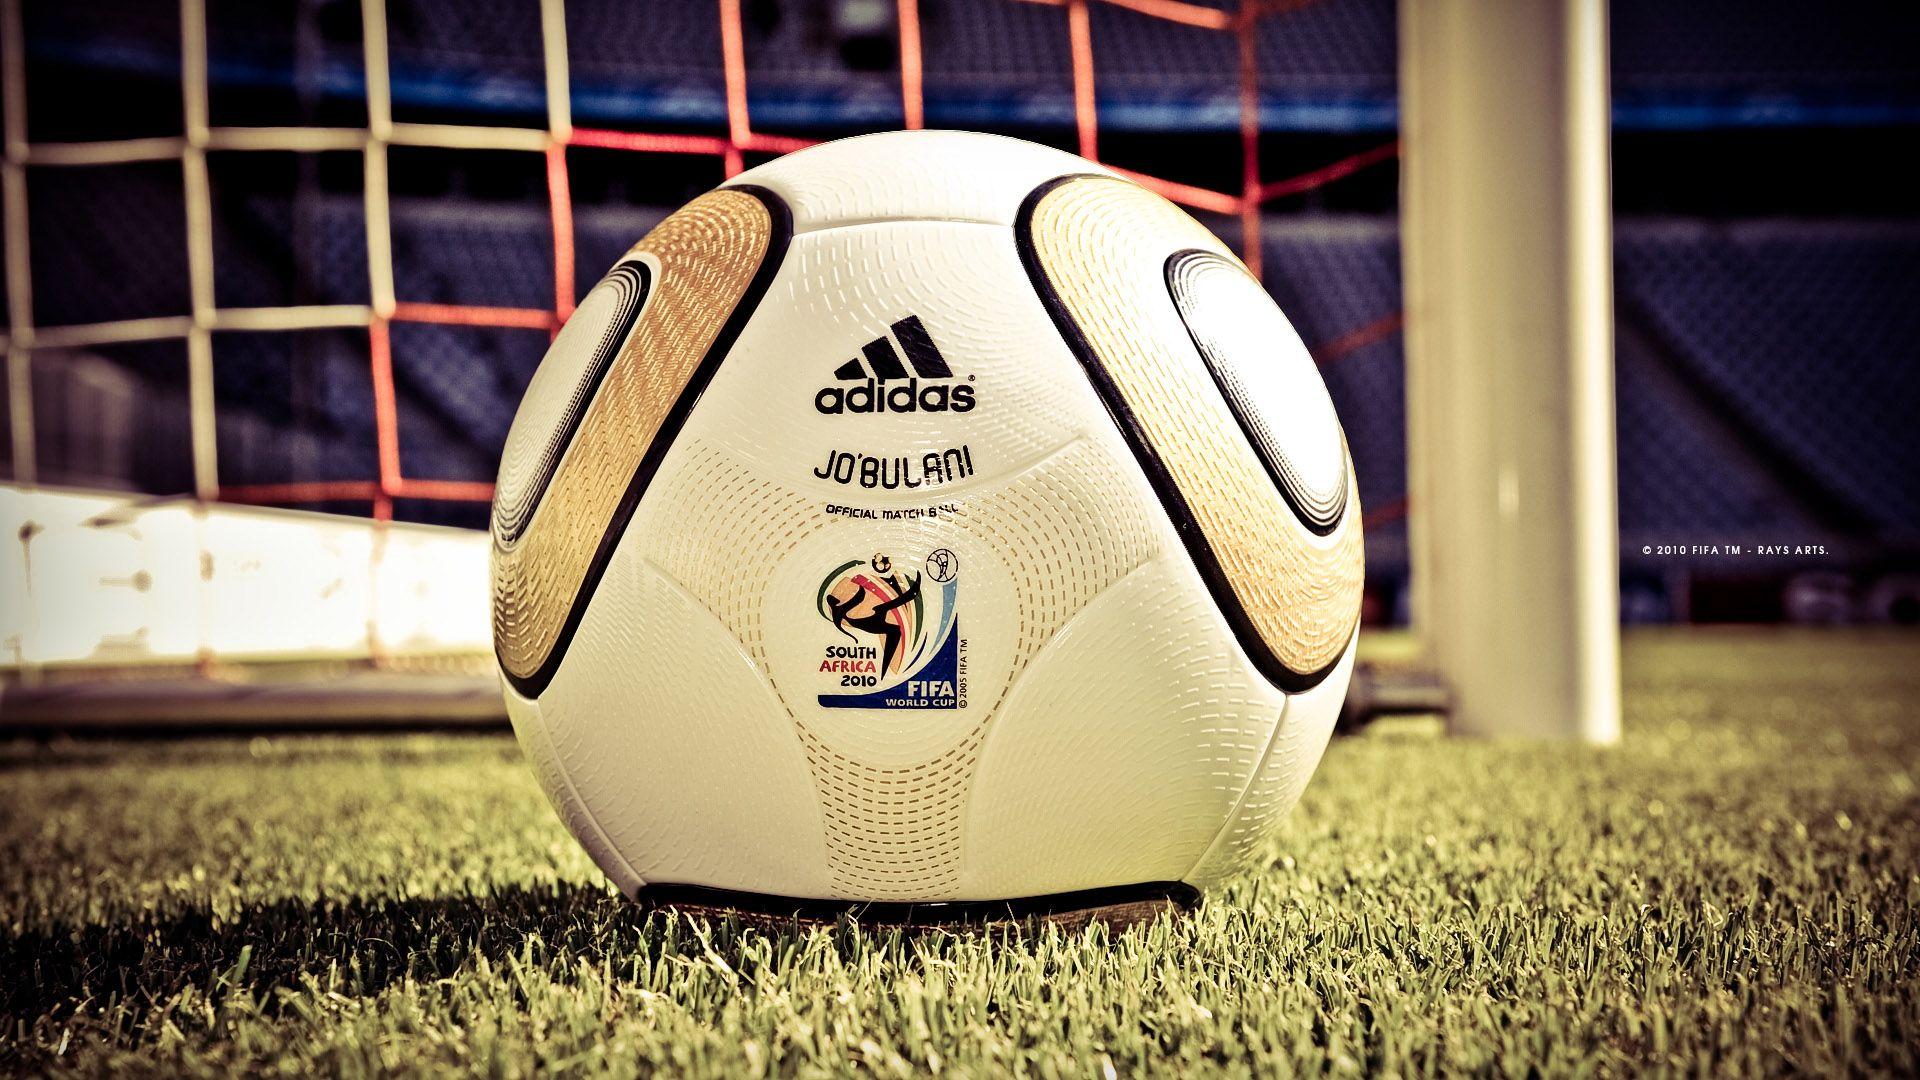 Adidas Jo'bulani, Official Final Ball of FIFA World Cup 2010. Football, Football wallpaper, Soccer predictions